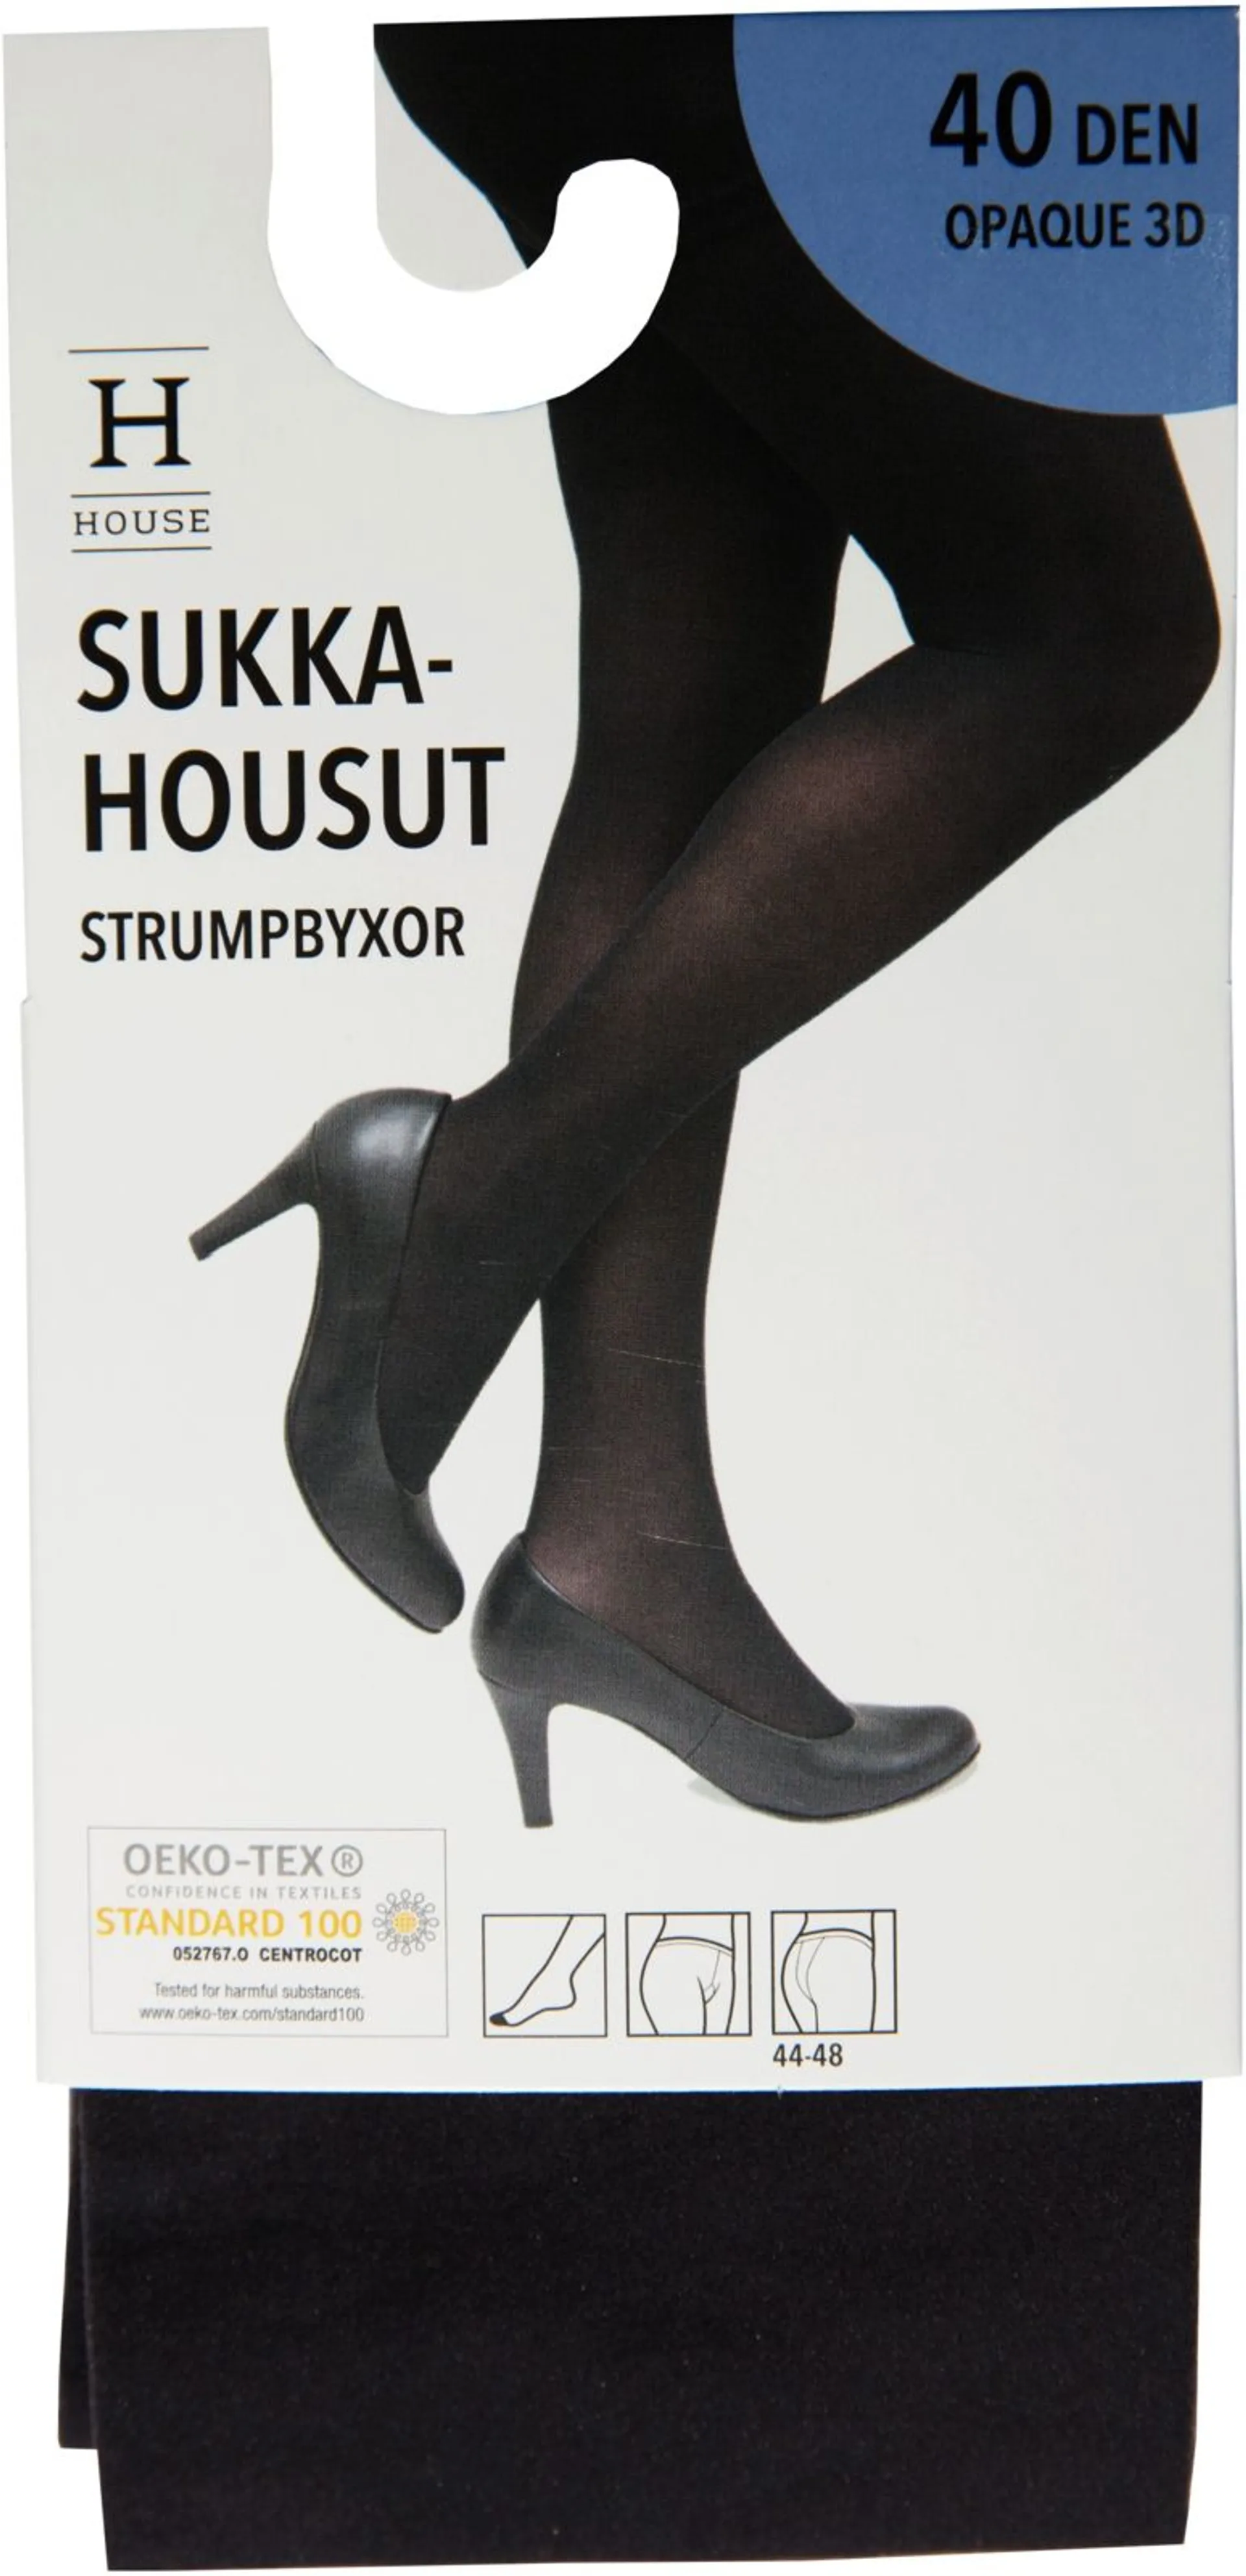 House naisten sukkahousut 40 den 3D Opaque - BLACK